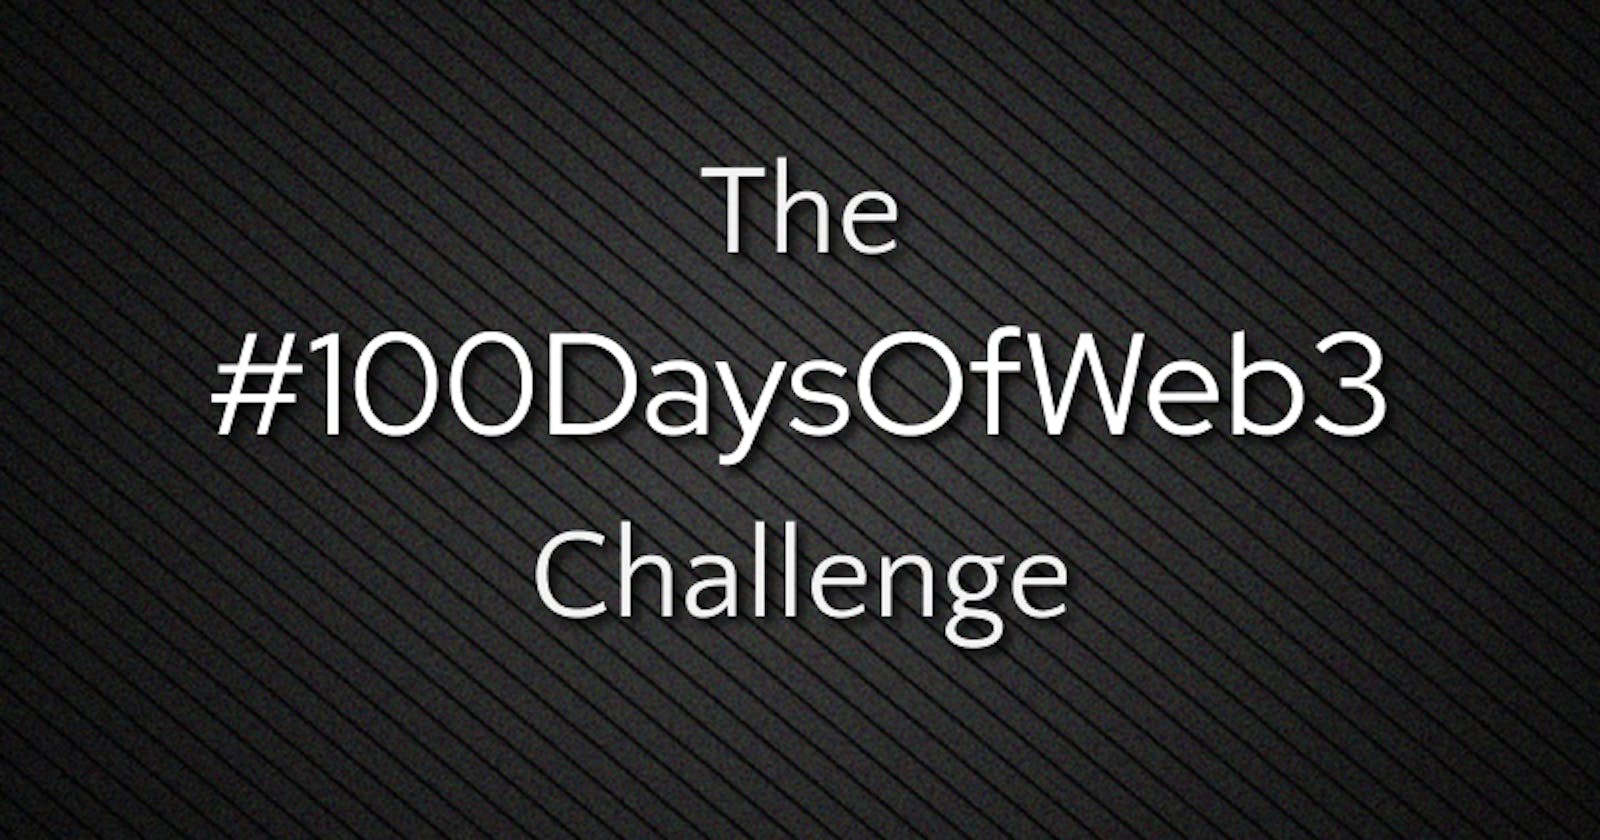 The #100DaysOfWeb3 Challenge